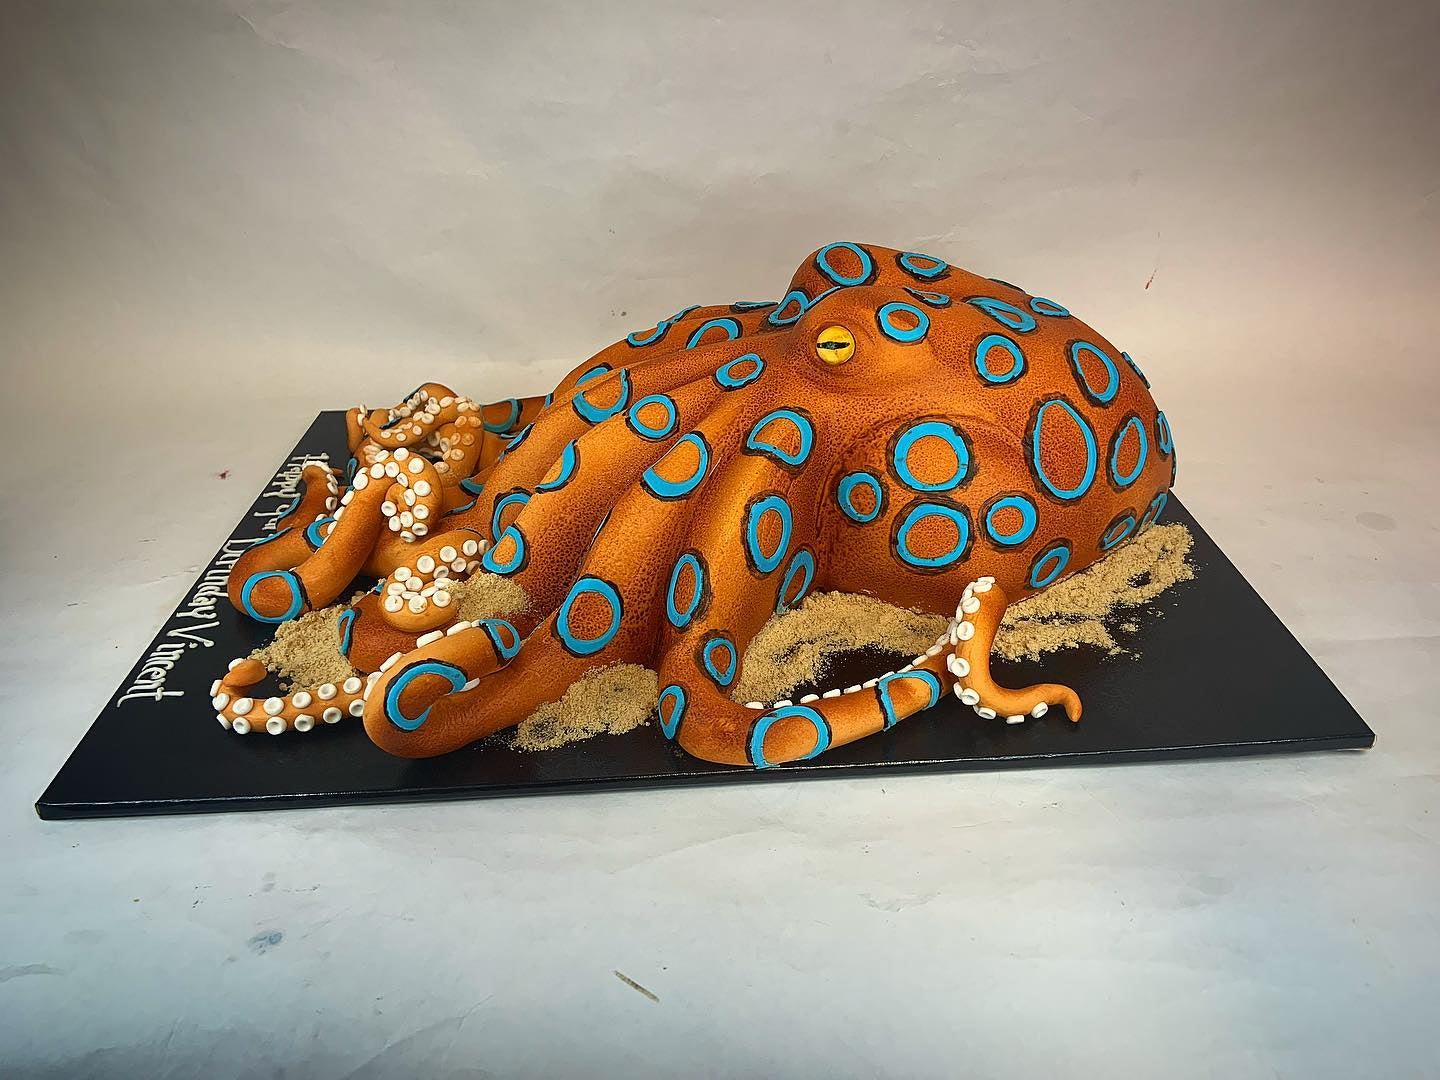 Octopus themed Rotating Cake Cake